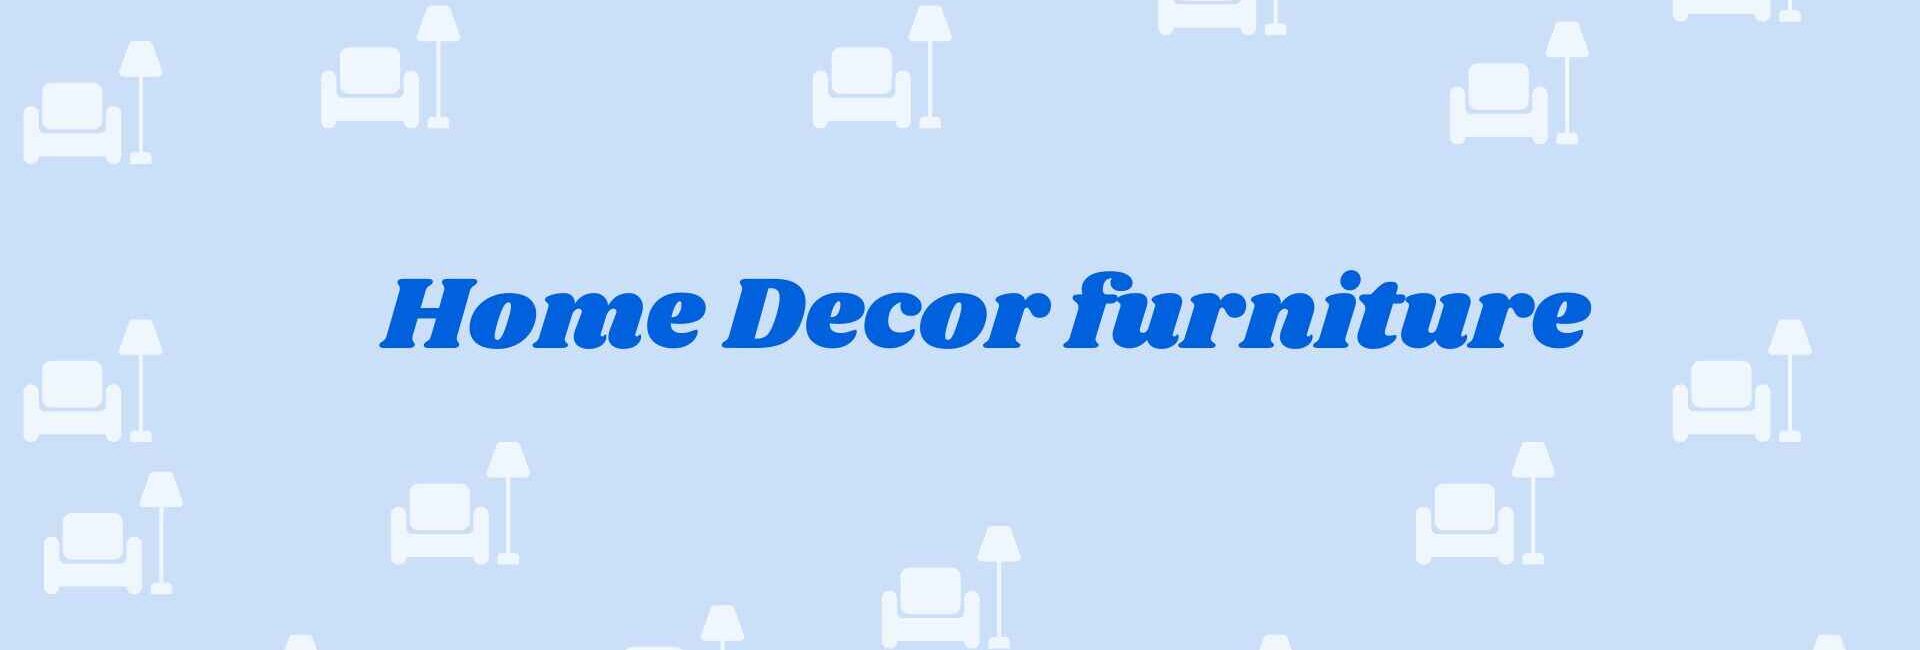 Home Decor furniture - home decor dealers in noida